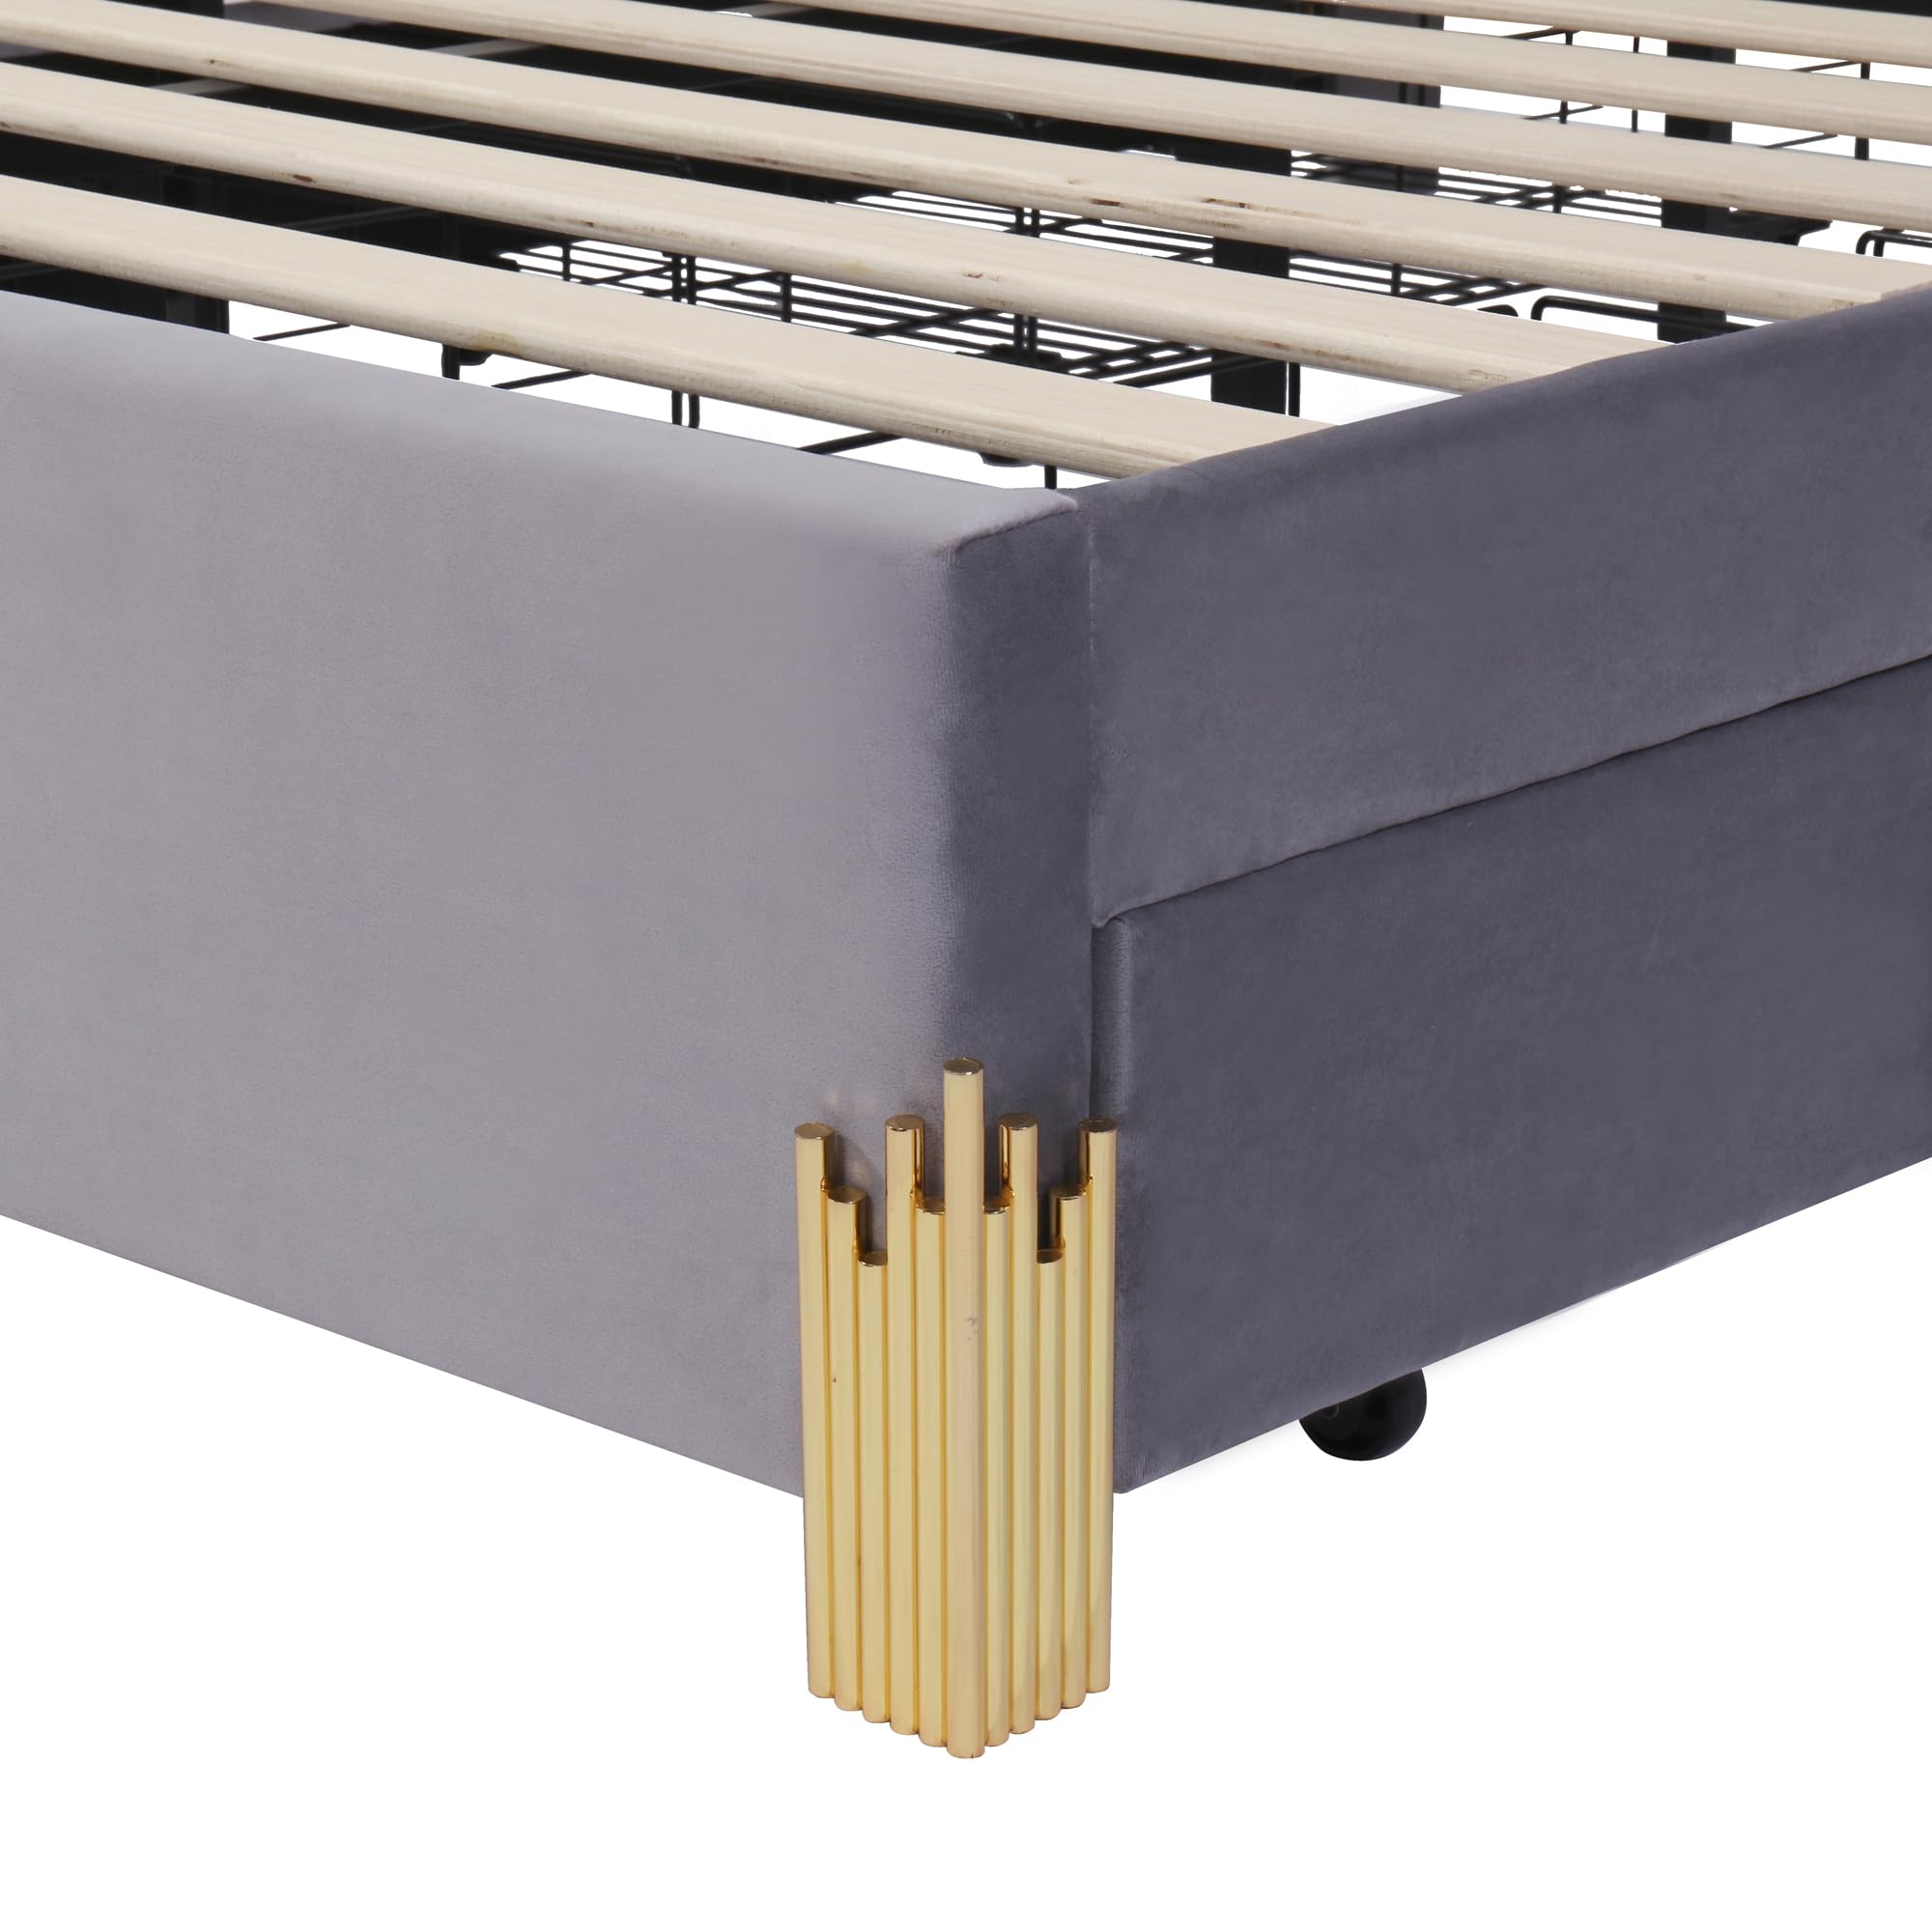 JIVOIT Queen Size Upholstered Platform Bed with 4 Drawers, Modern LED Light Platform Bed Frame, Stylish Irregular Metal Bed Legs Design, Upholstered Storage Bed for Kids Teens (Gray,Queen,Metal Legs)